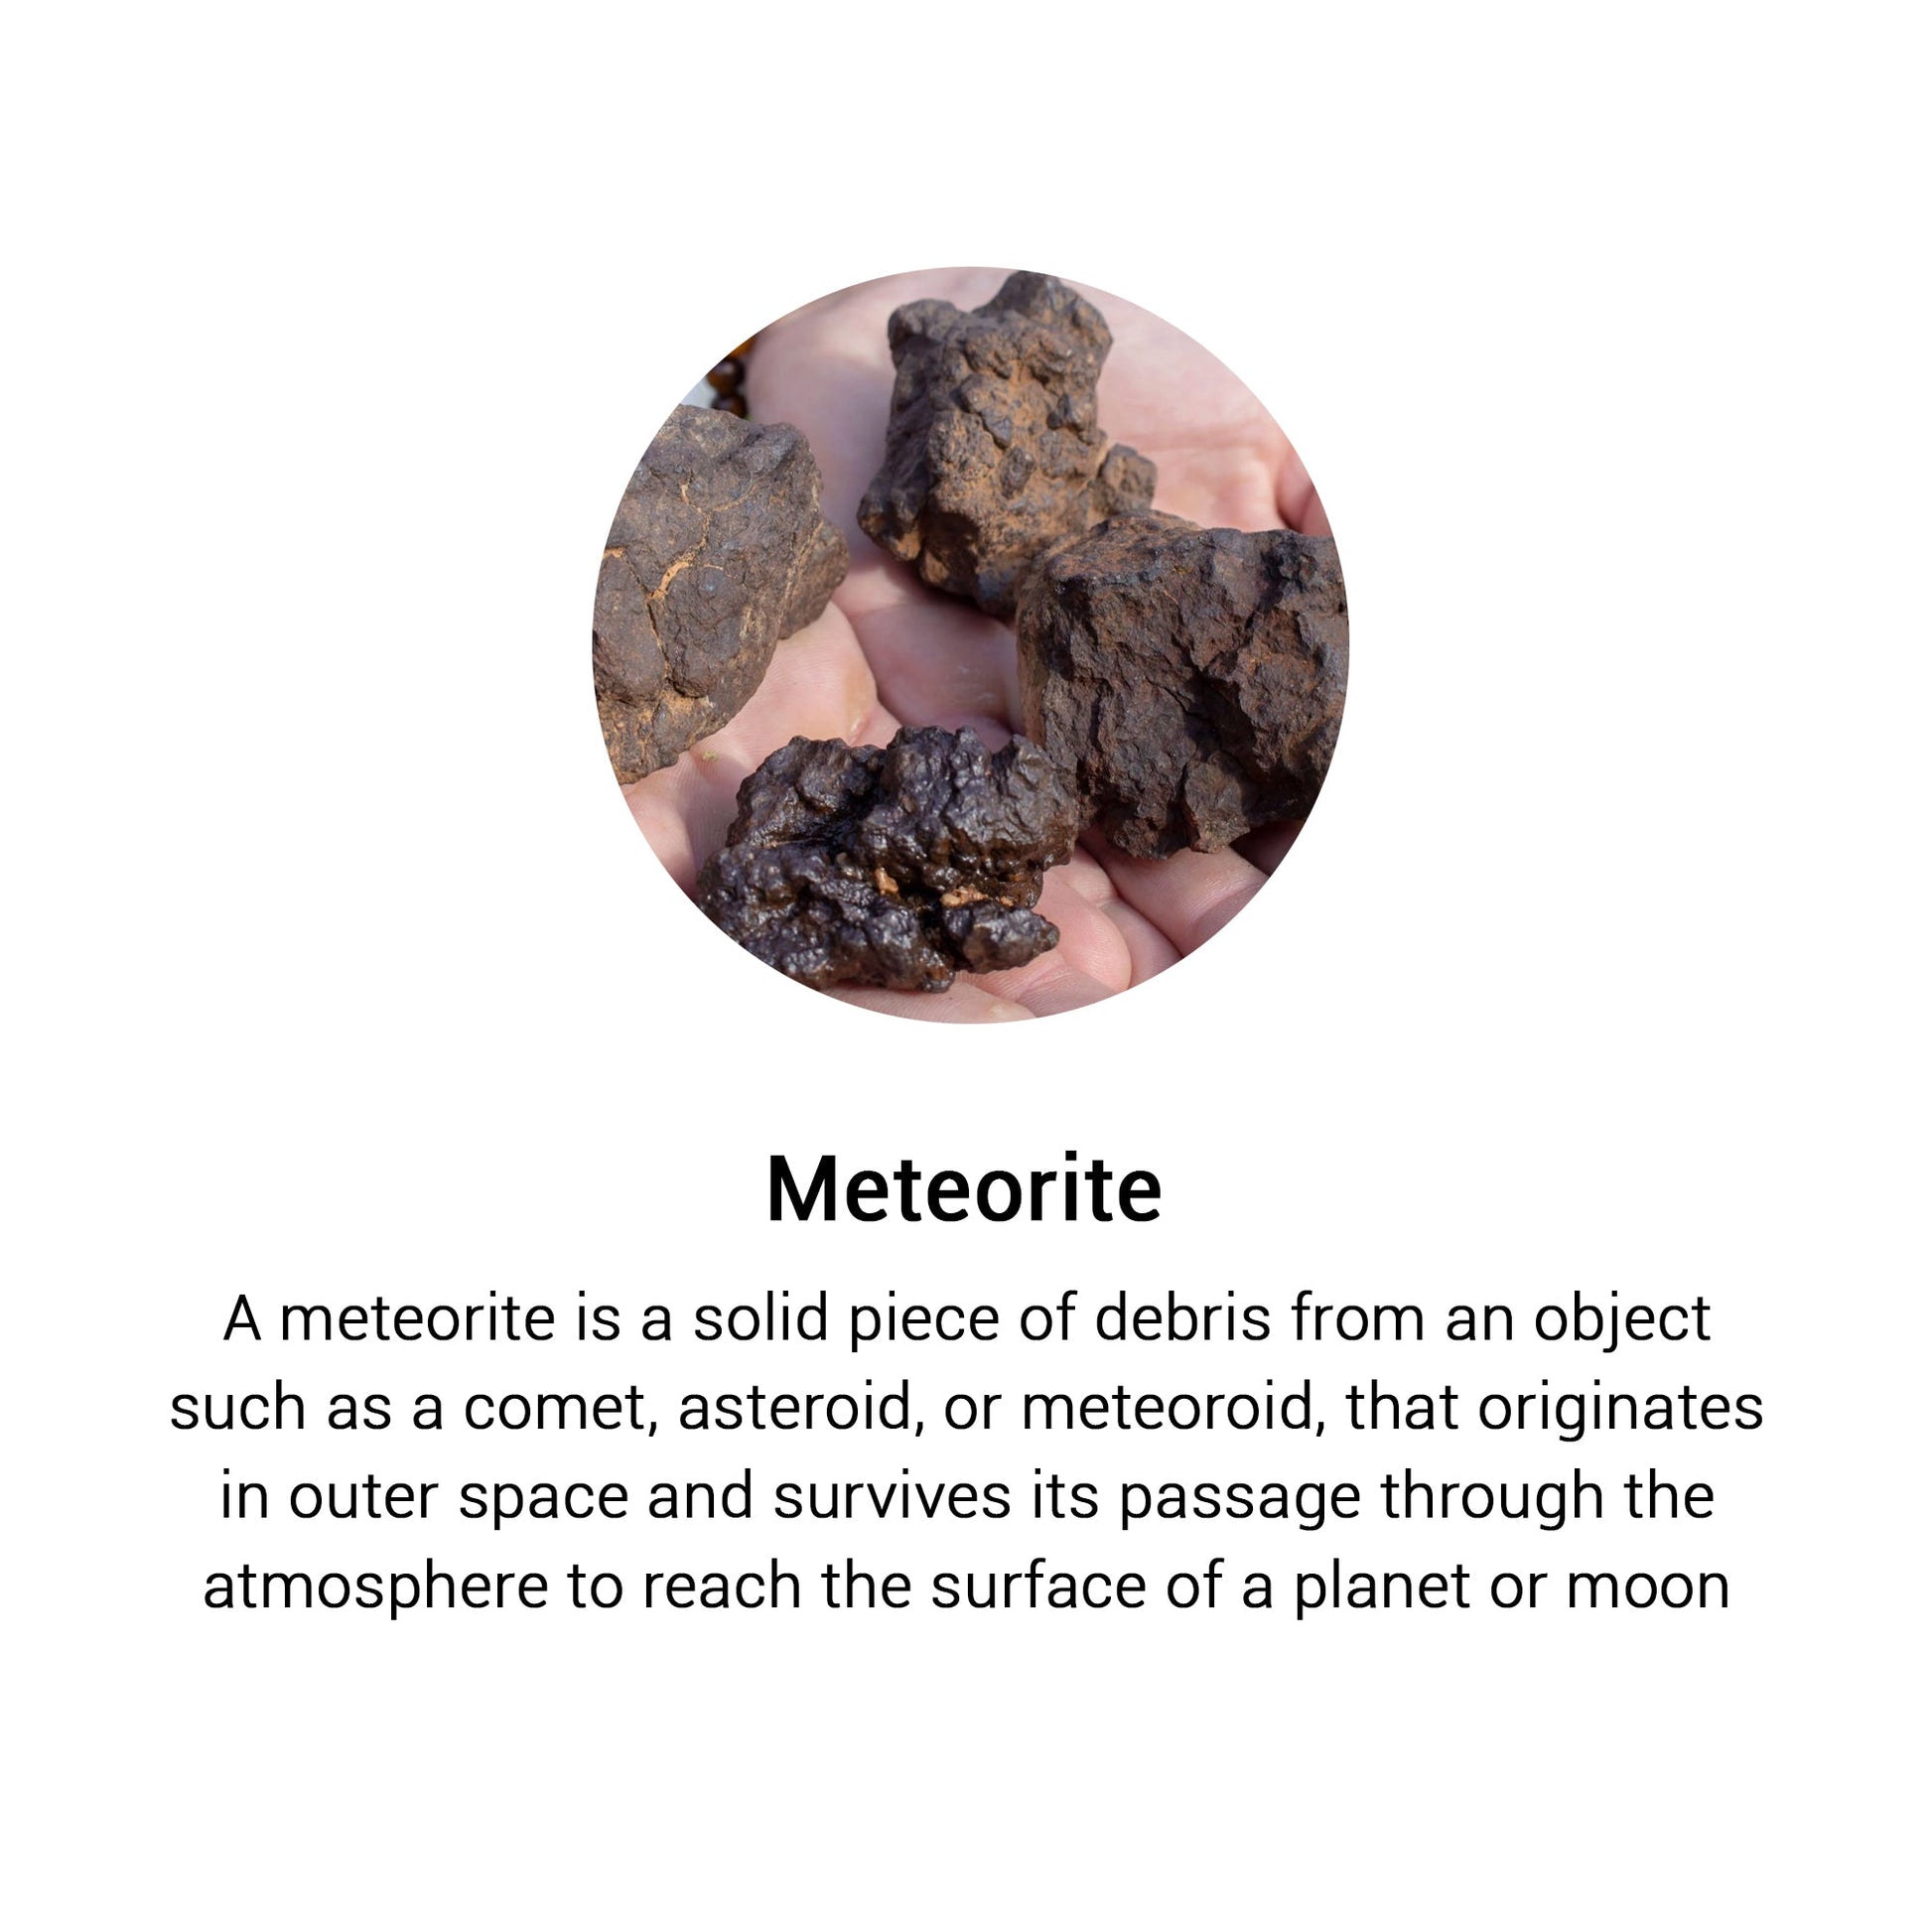 Black Iron Meteorite Face Home Decor Statue - OnShelf